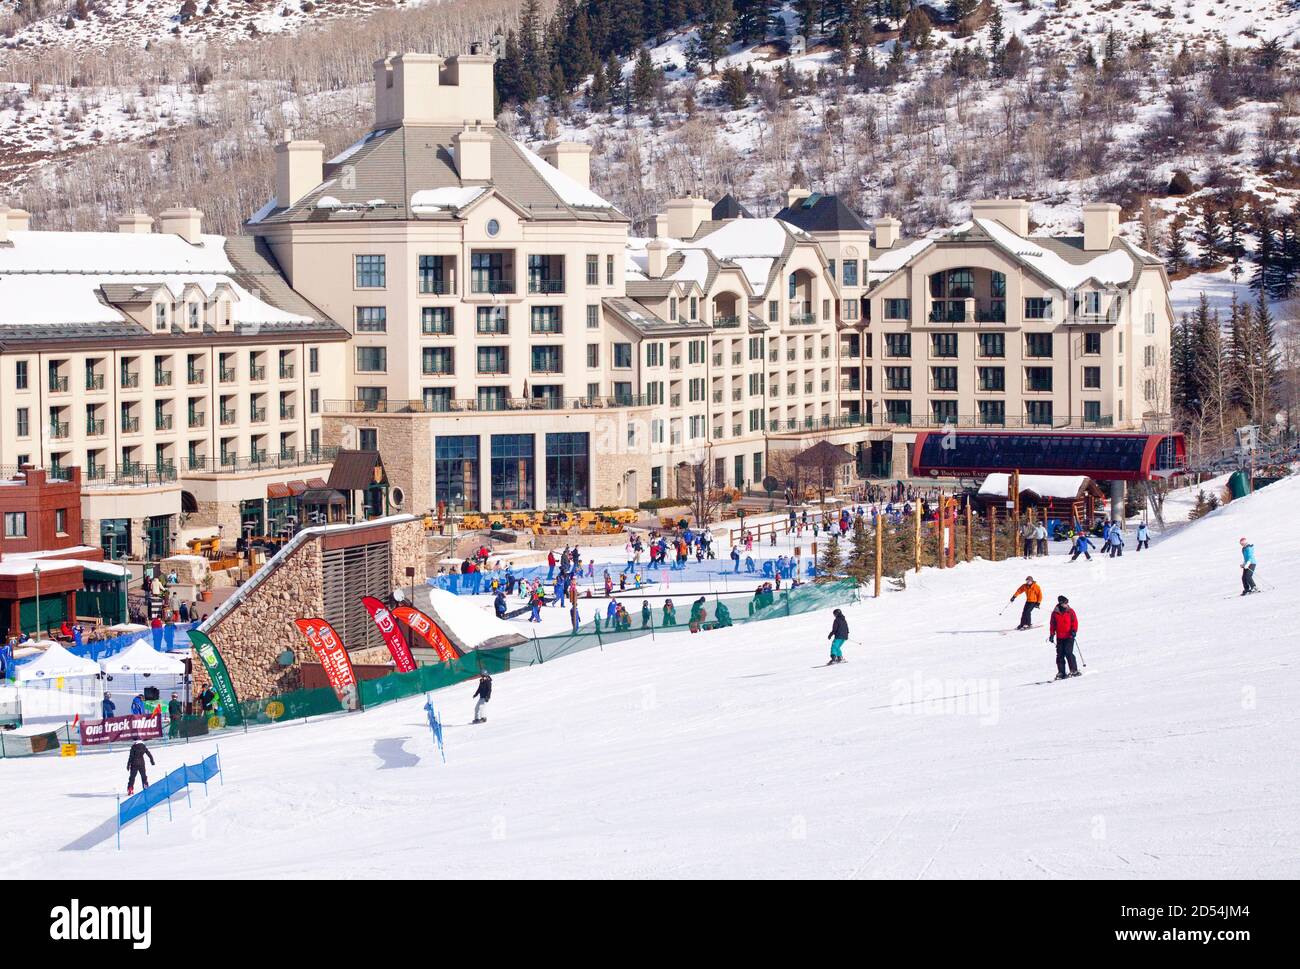 Beaver Creek Hotel and winter ski resort Colorado, United States Stock  Photo - Alamy